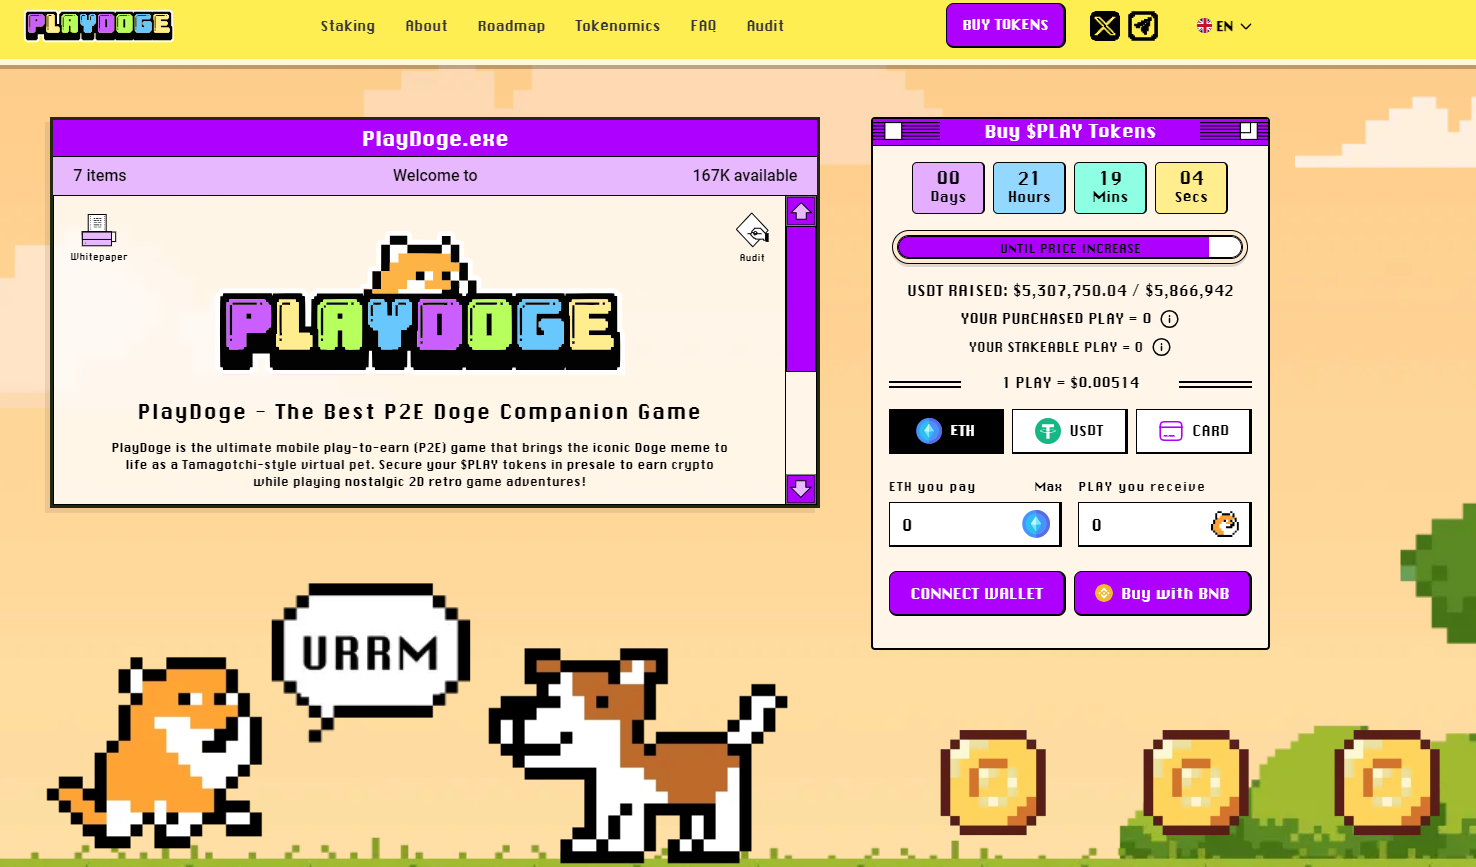 PlayDoge - Website